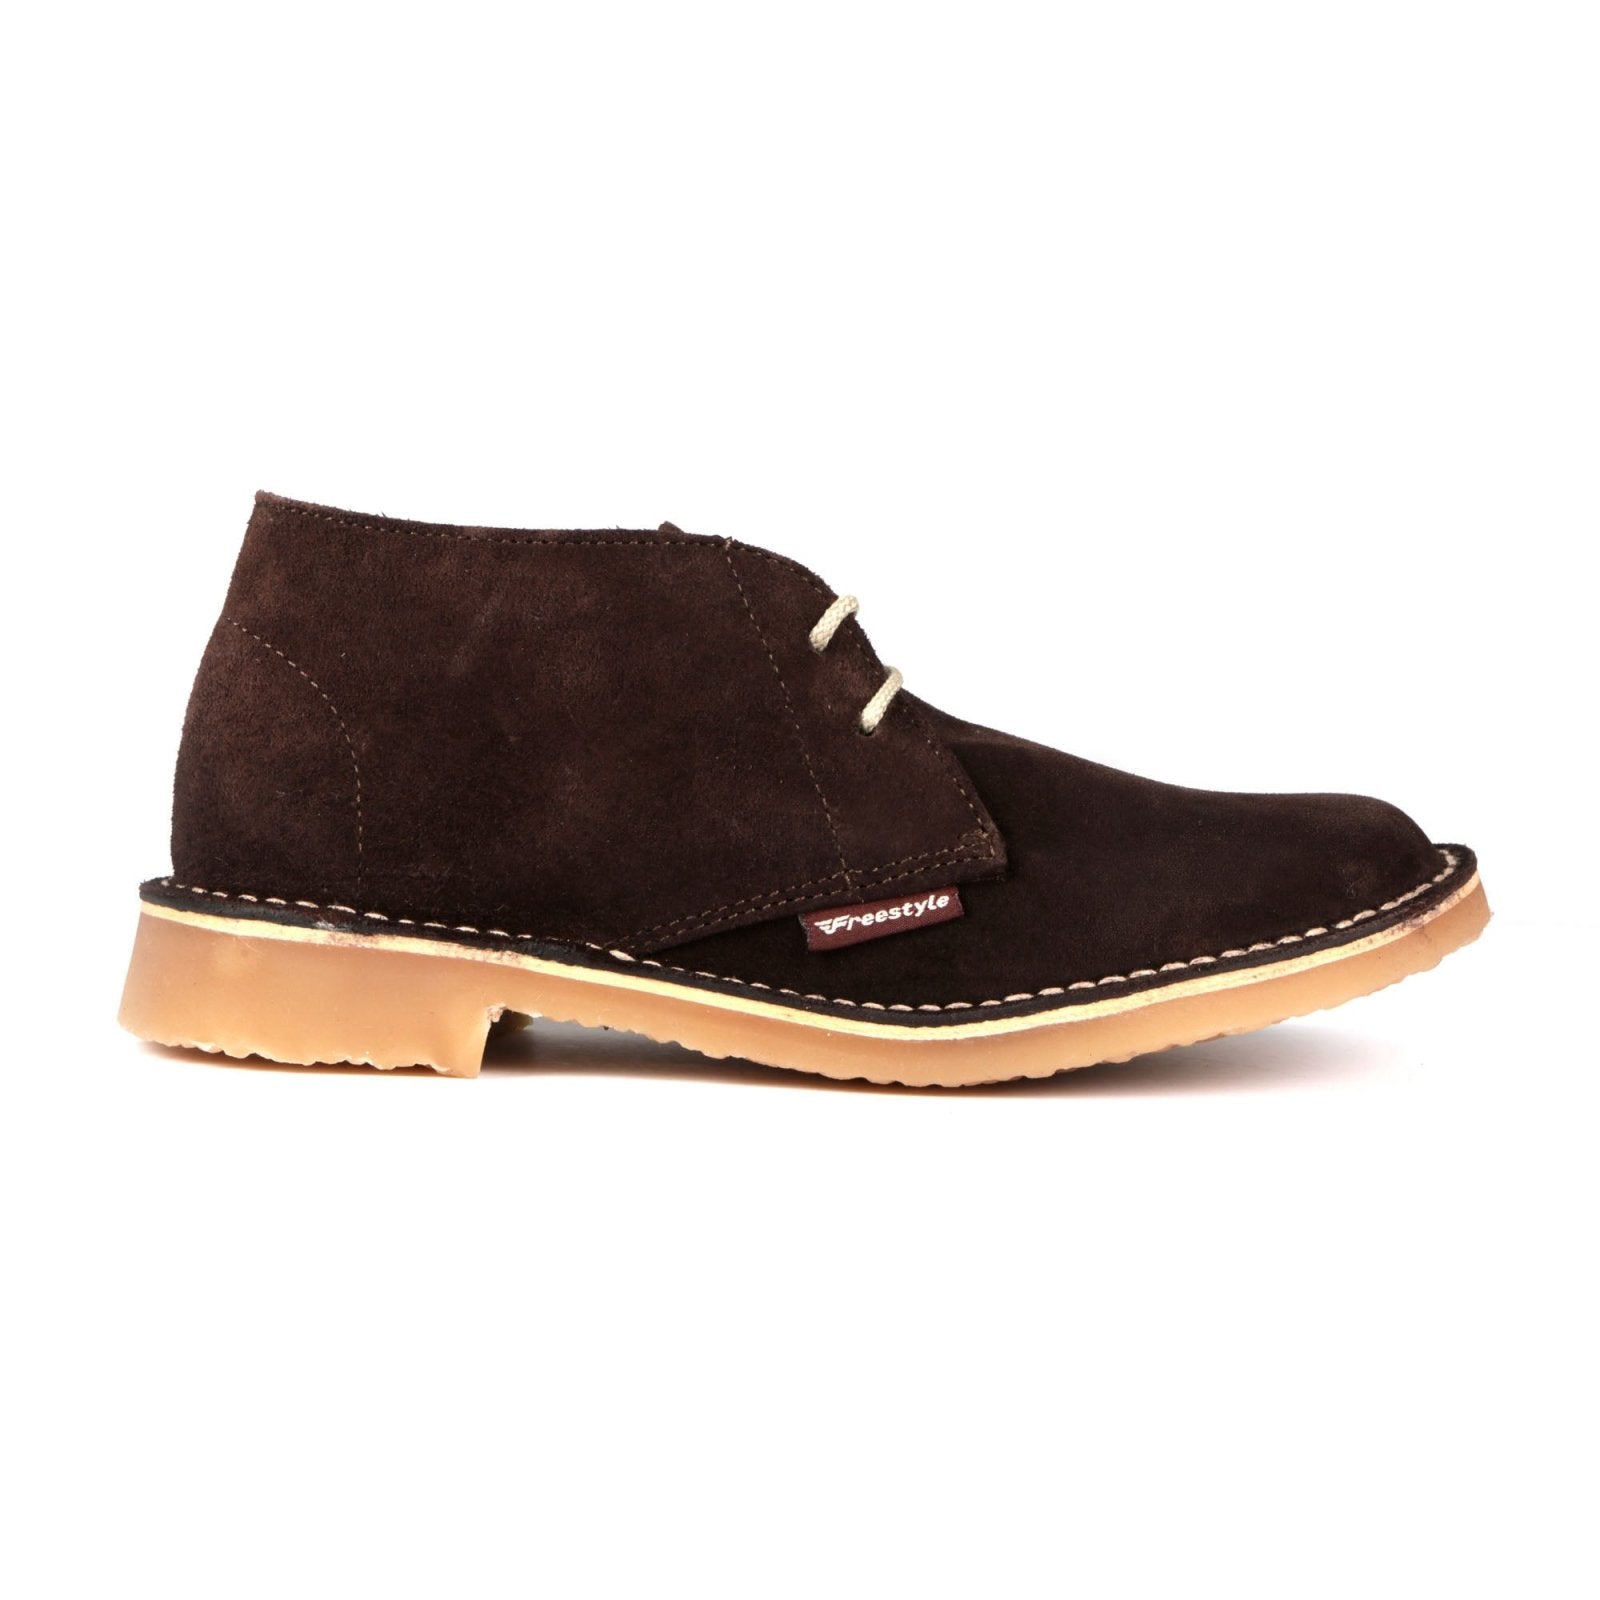 Hunter Vellie Unisex Premium Suede Veldskoen - Chocolate - Freestyle SA Proudly local vellies leather boots veldskoens vellies leather shoes suede veldskoens